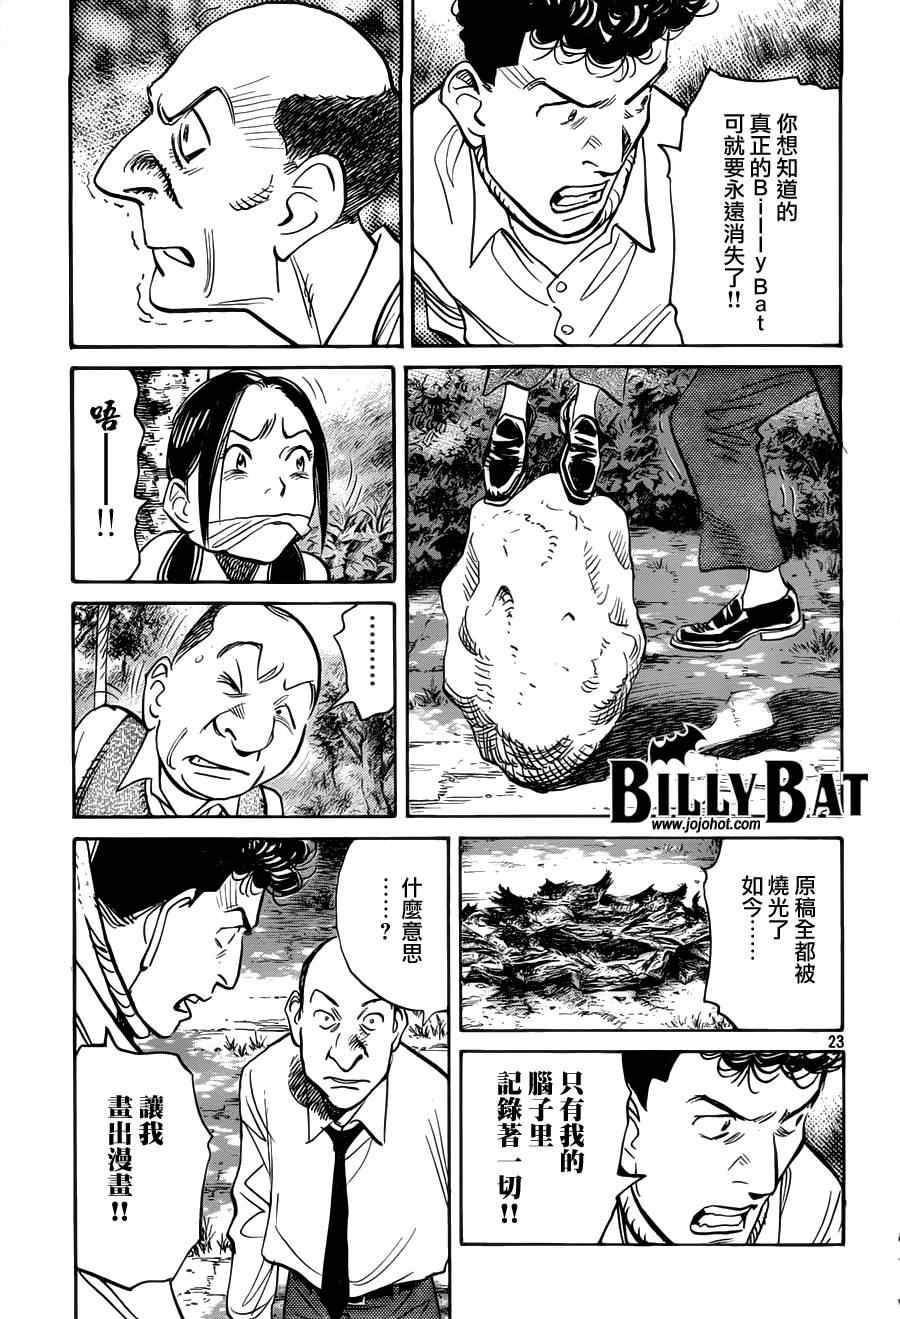 Billy_Bat - 第87話 - 5